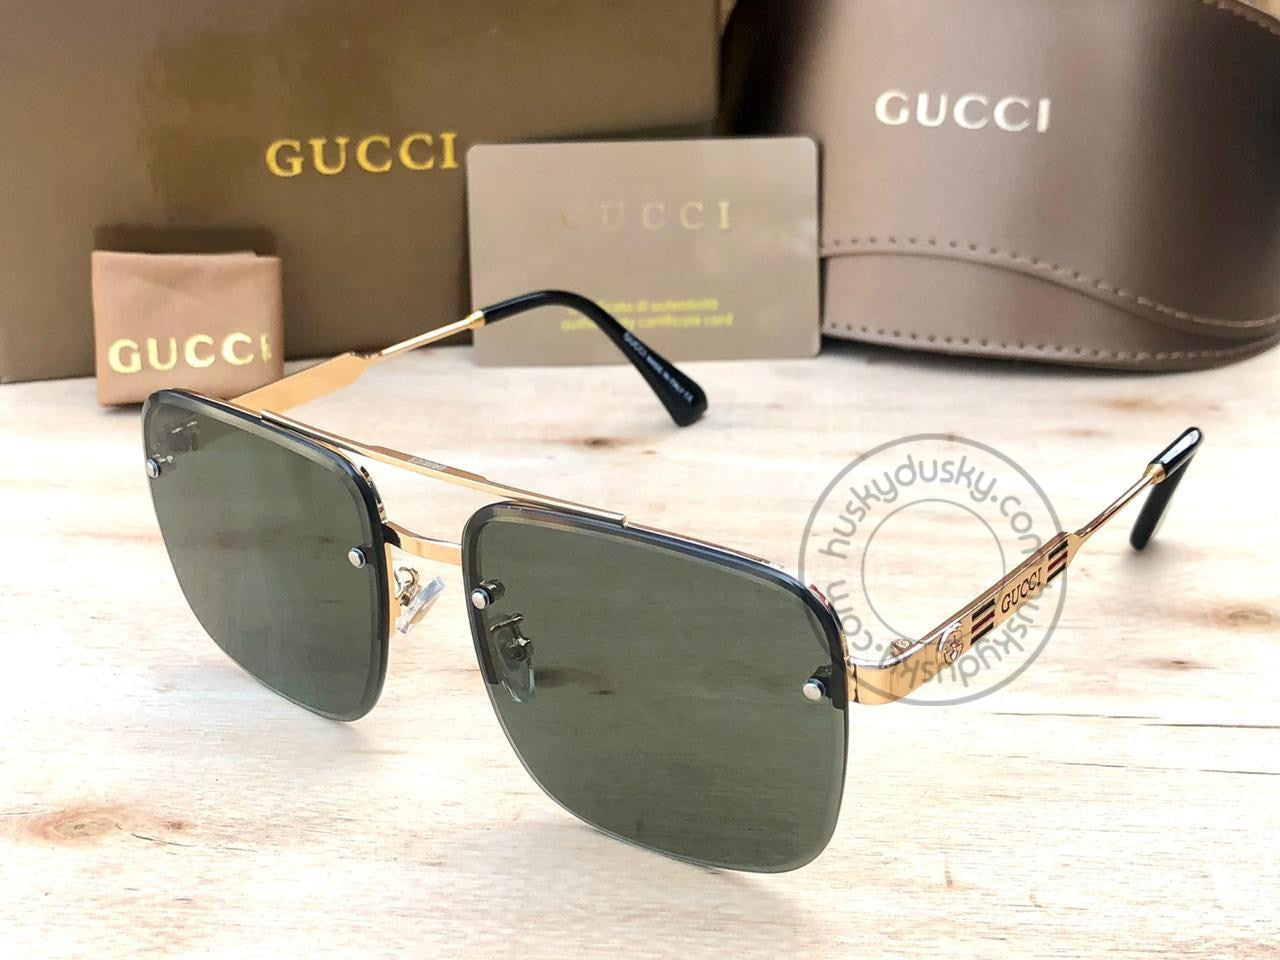 Gucci Branded Black Color Glass Men's Women's Sunglass for Man Woman or Girl GU-350 Gold & Black Stick Gift Sunglass